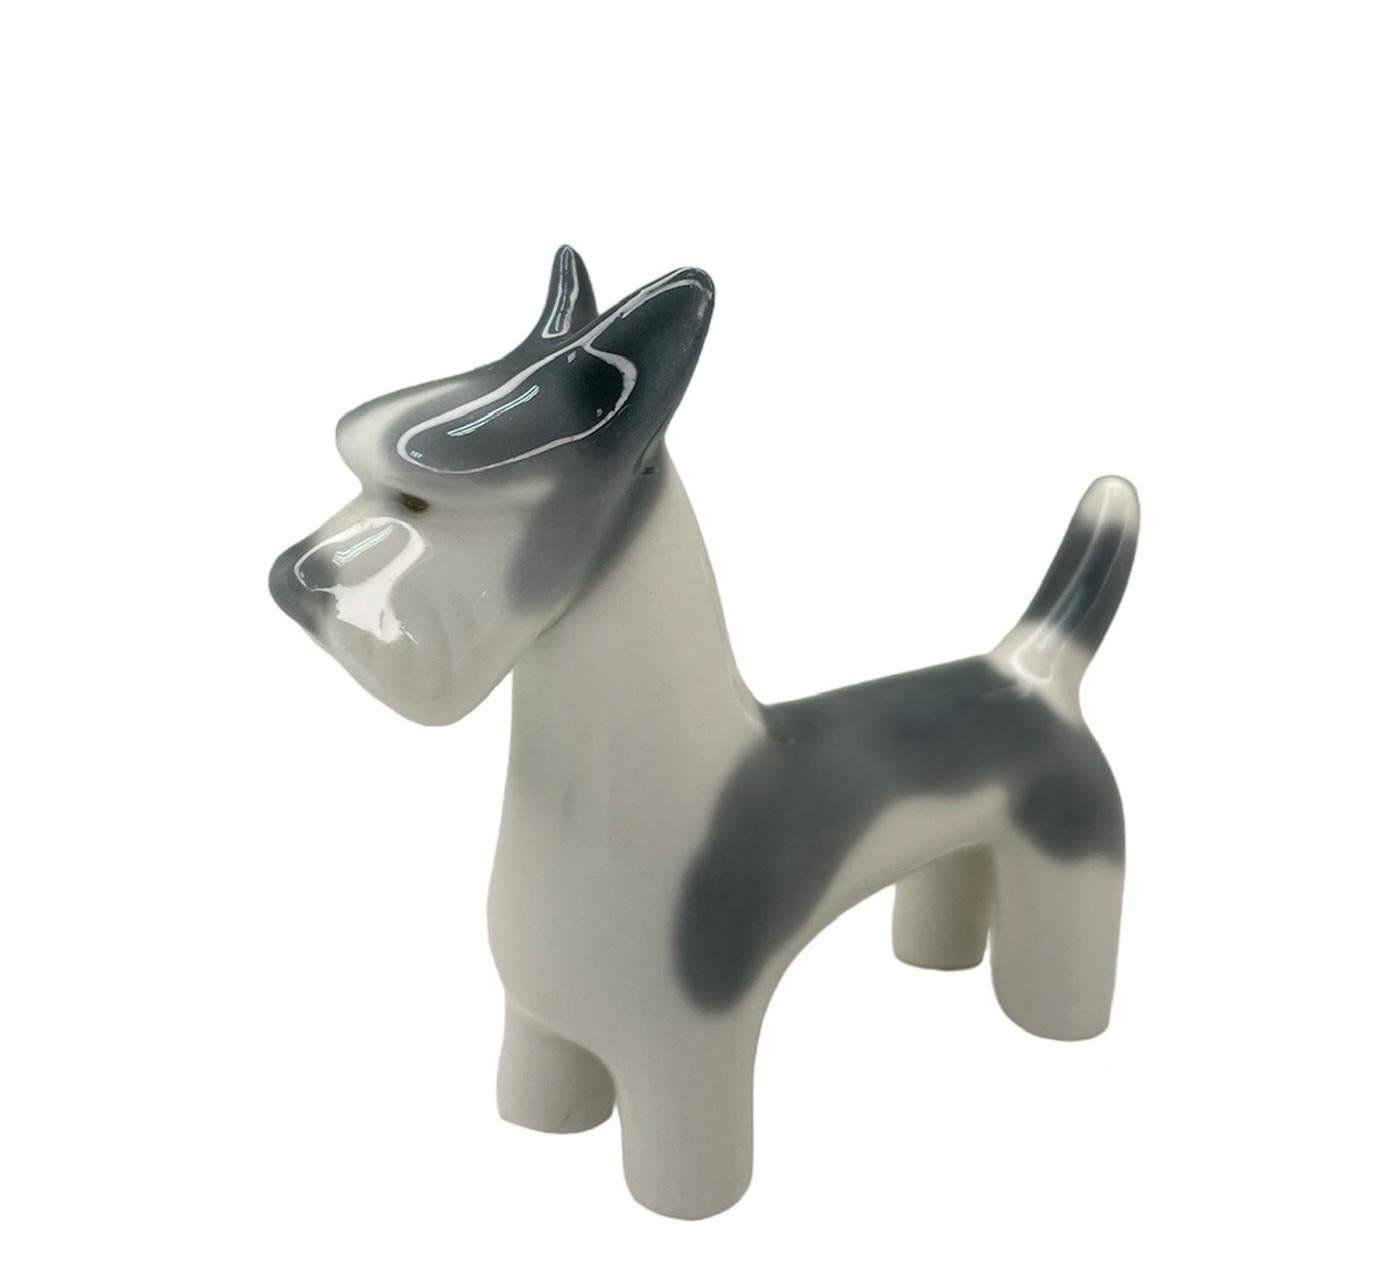 Molded Lladro Porcelain Mini Figurine Of A Scottish Terrier Dog For Sale